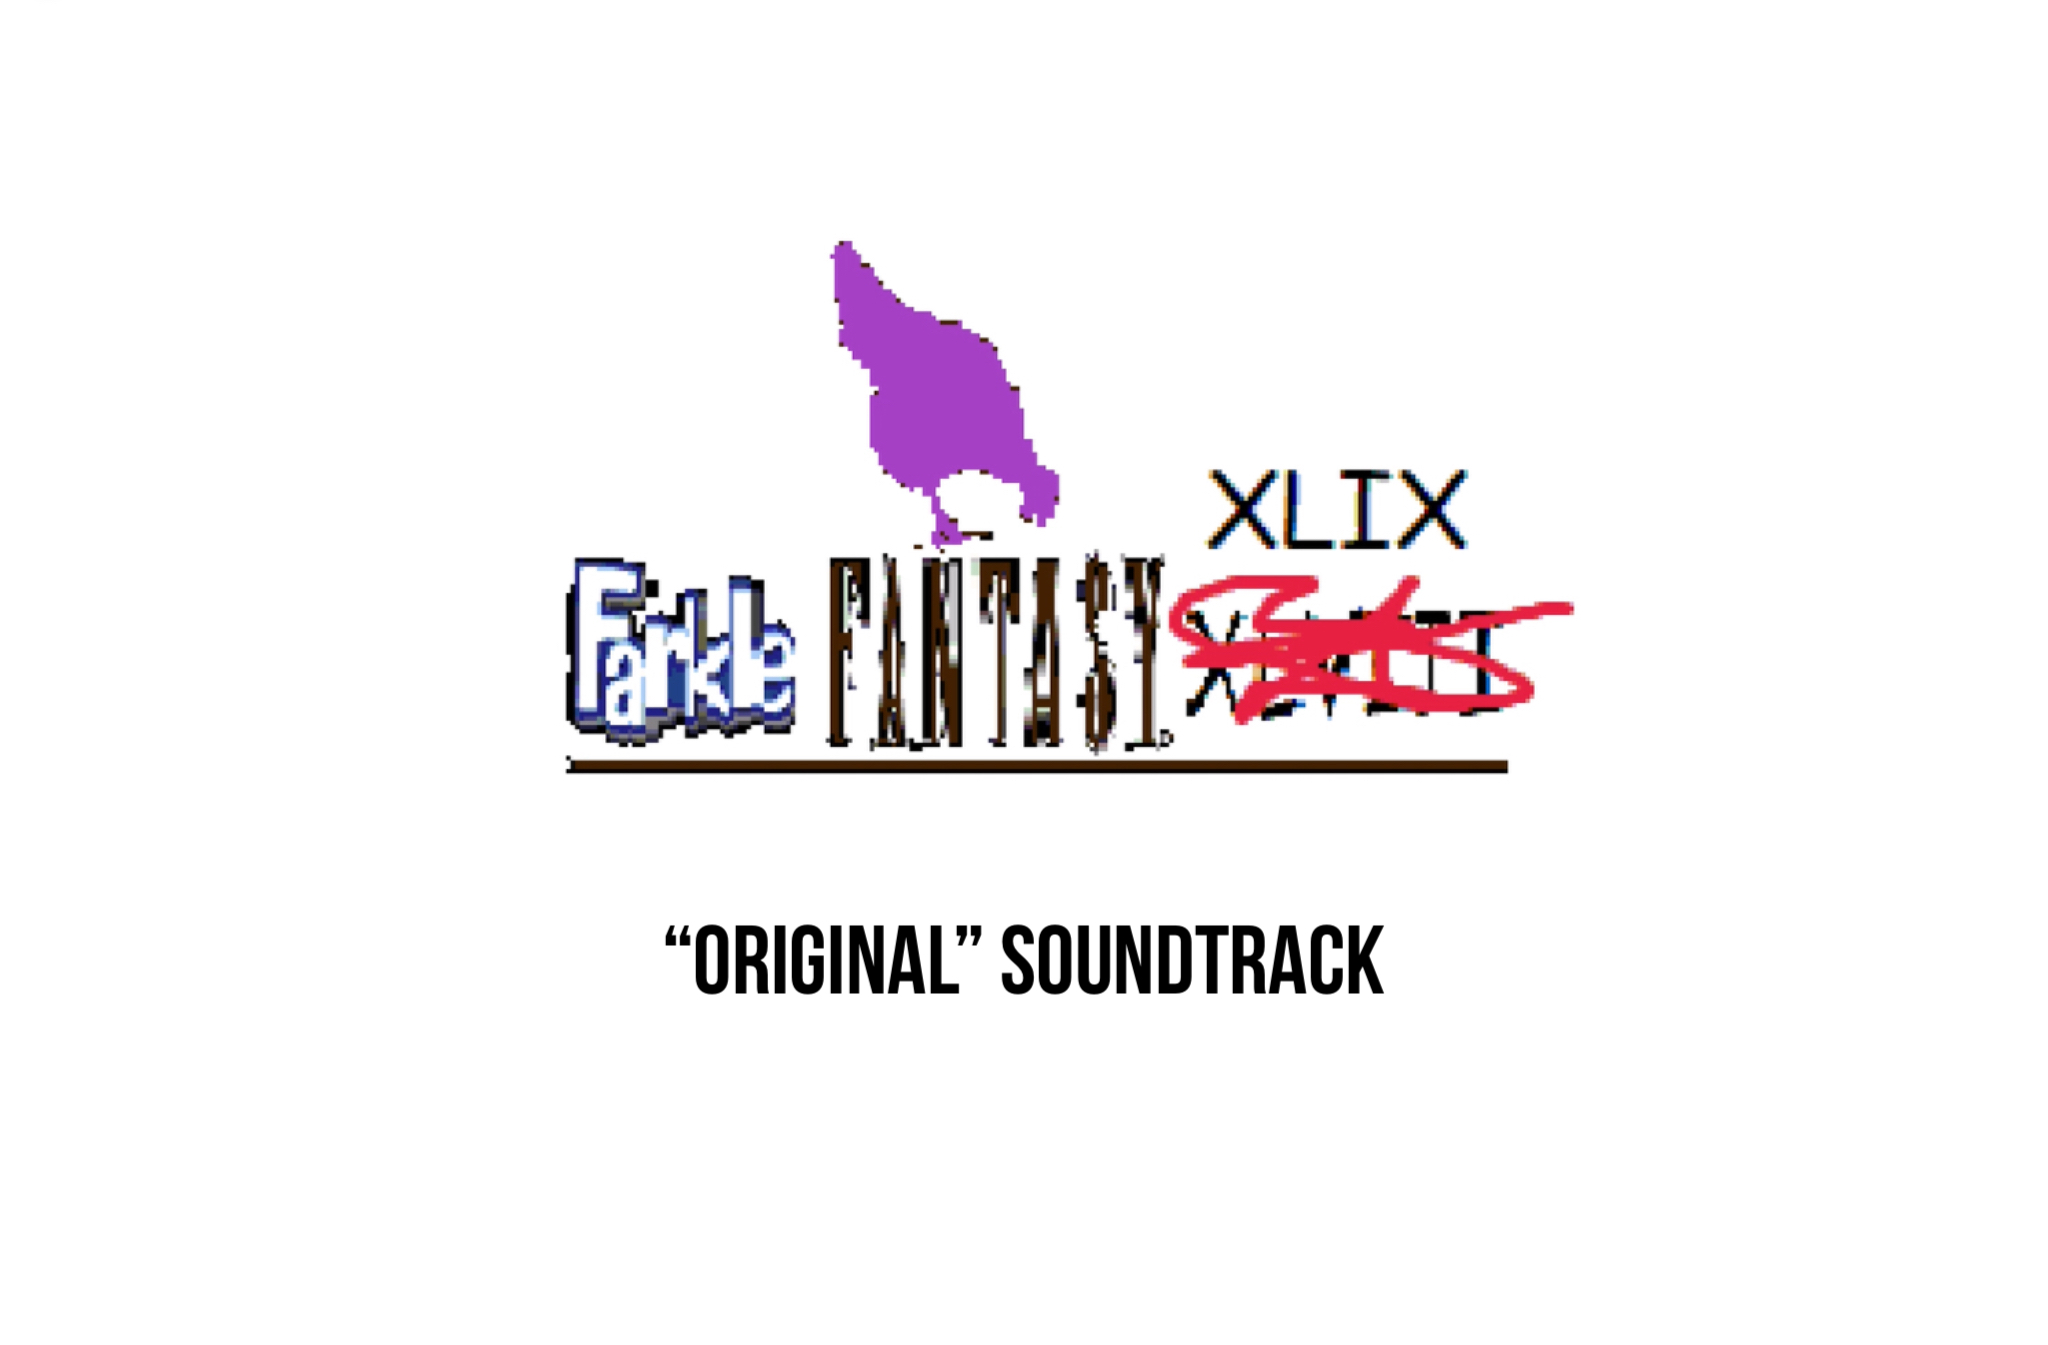 Farkle Fantasy XLIX "Original" Soundtrack